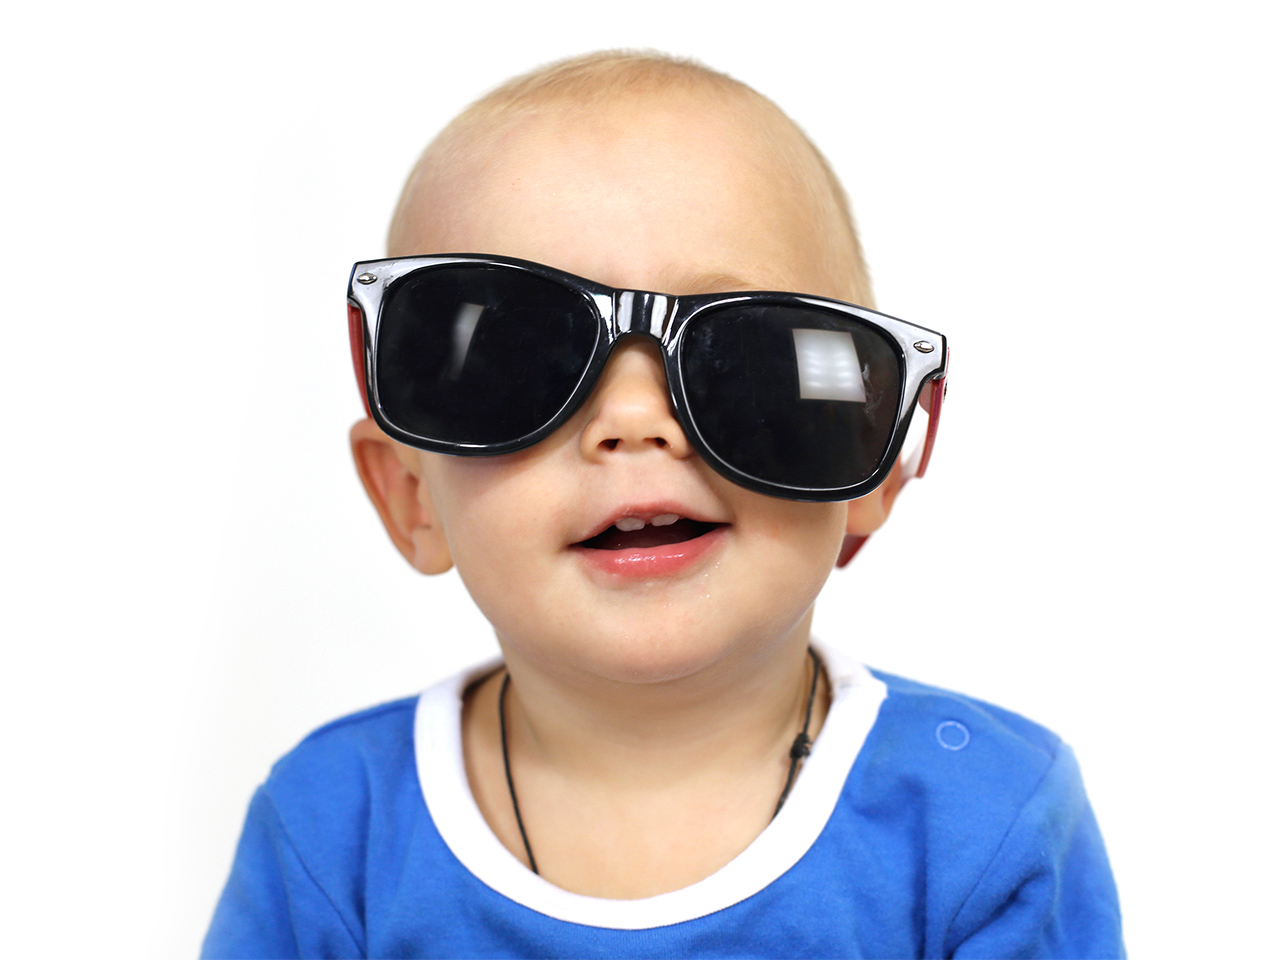 Baby wearing big sunglasses